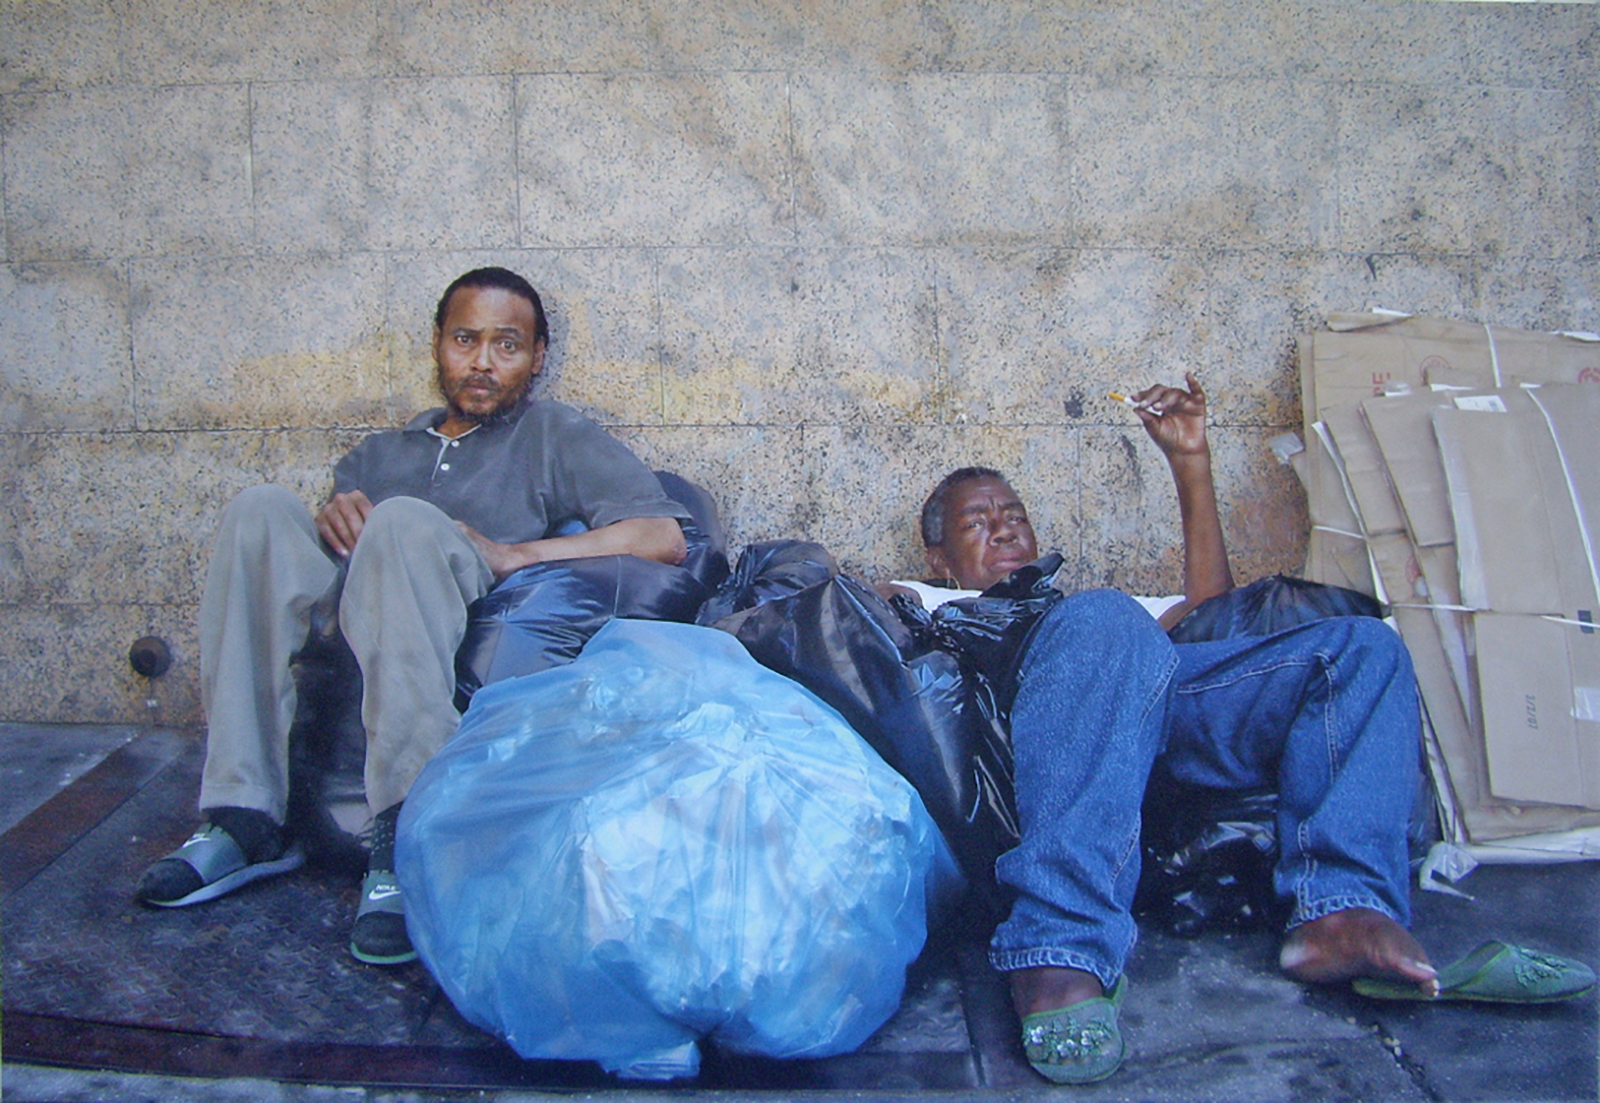 Homeless street painting by hyperrealist artist Denis Peterson